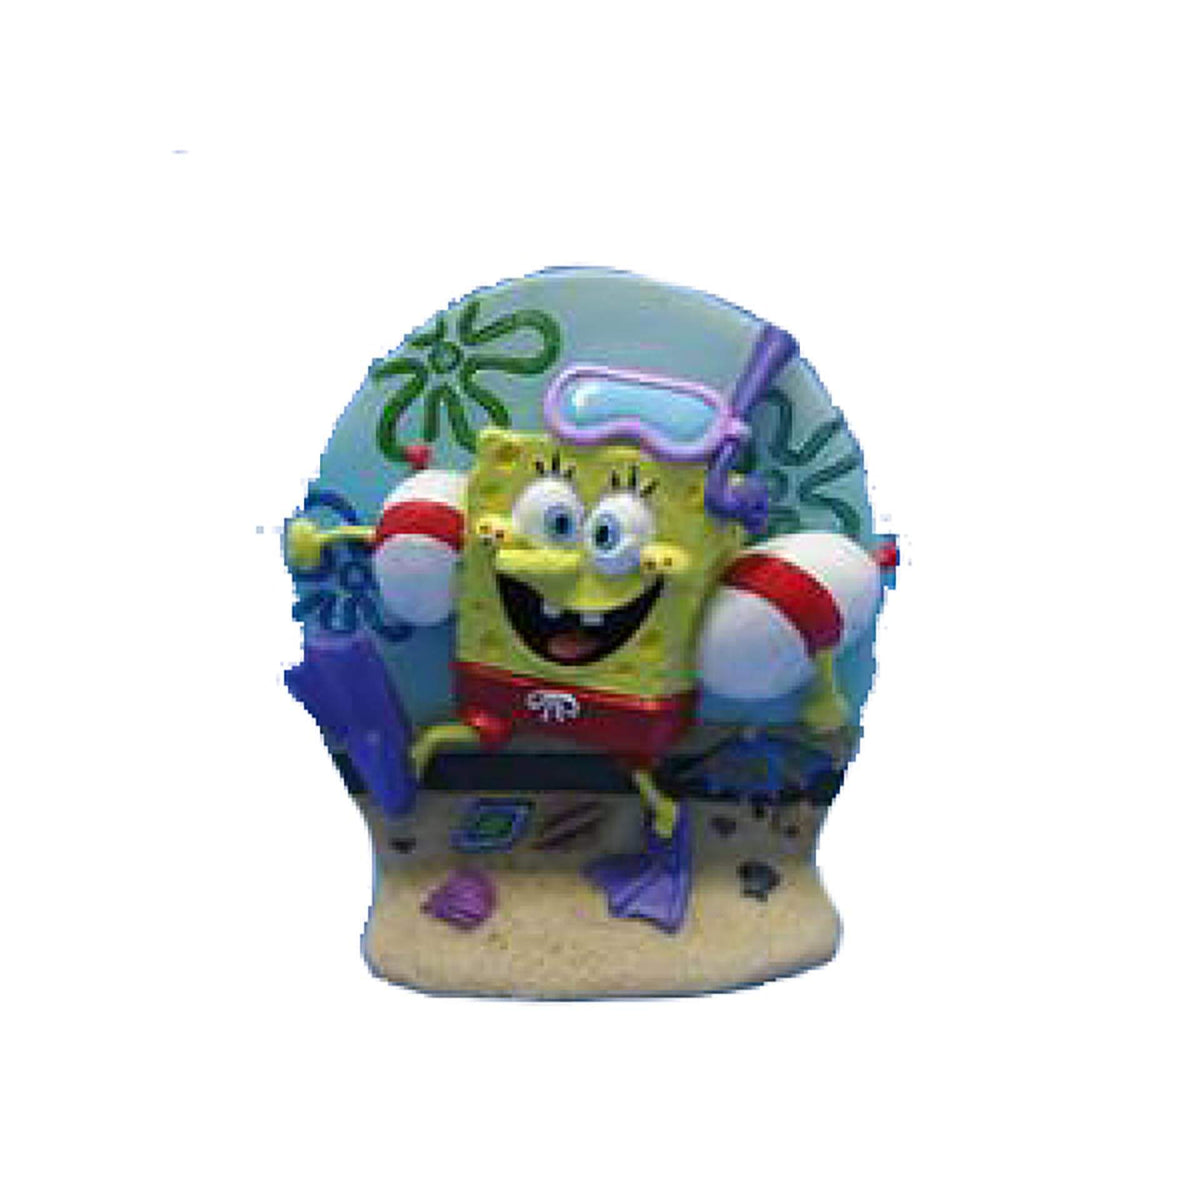 SpongeBob Squarepants Aerating Ornament Large Ornament - 7.6cm High